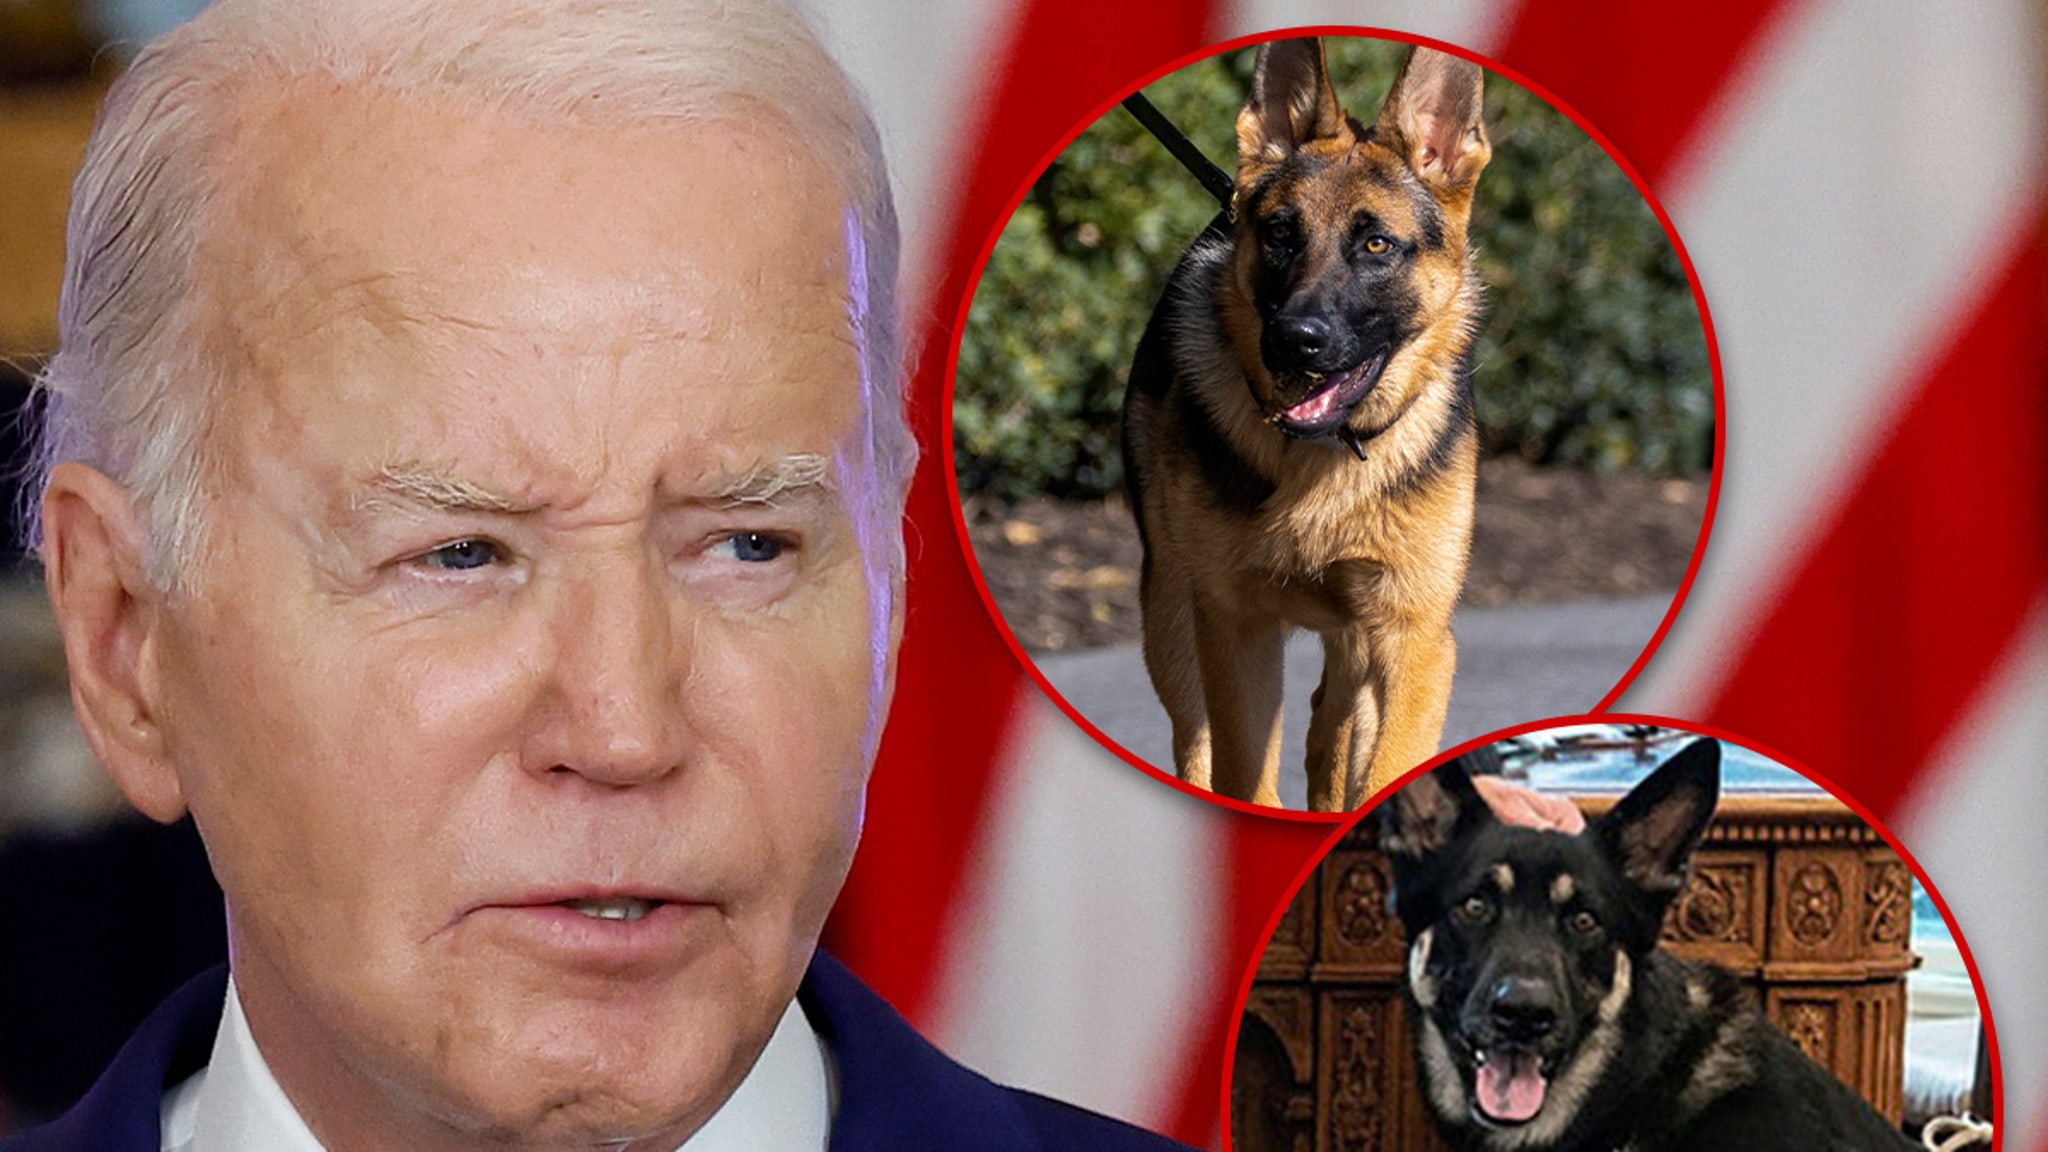 president-biden-present-for-multiple-dog-bites-on-secret-service-agents